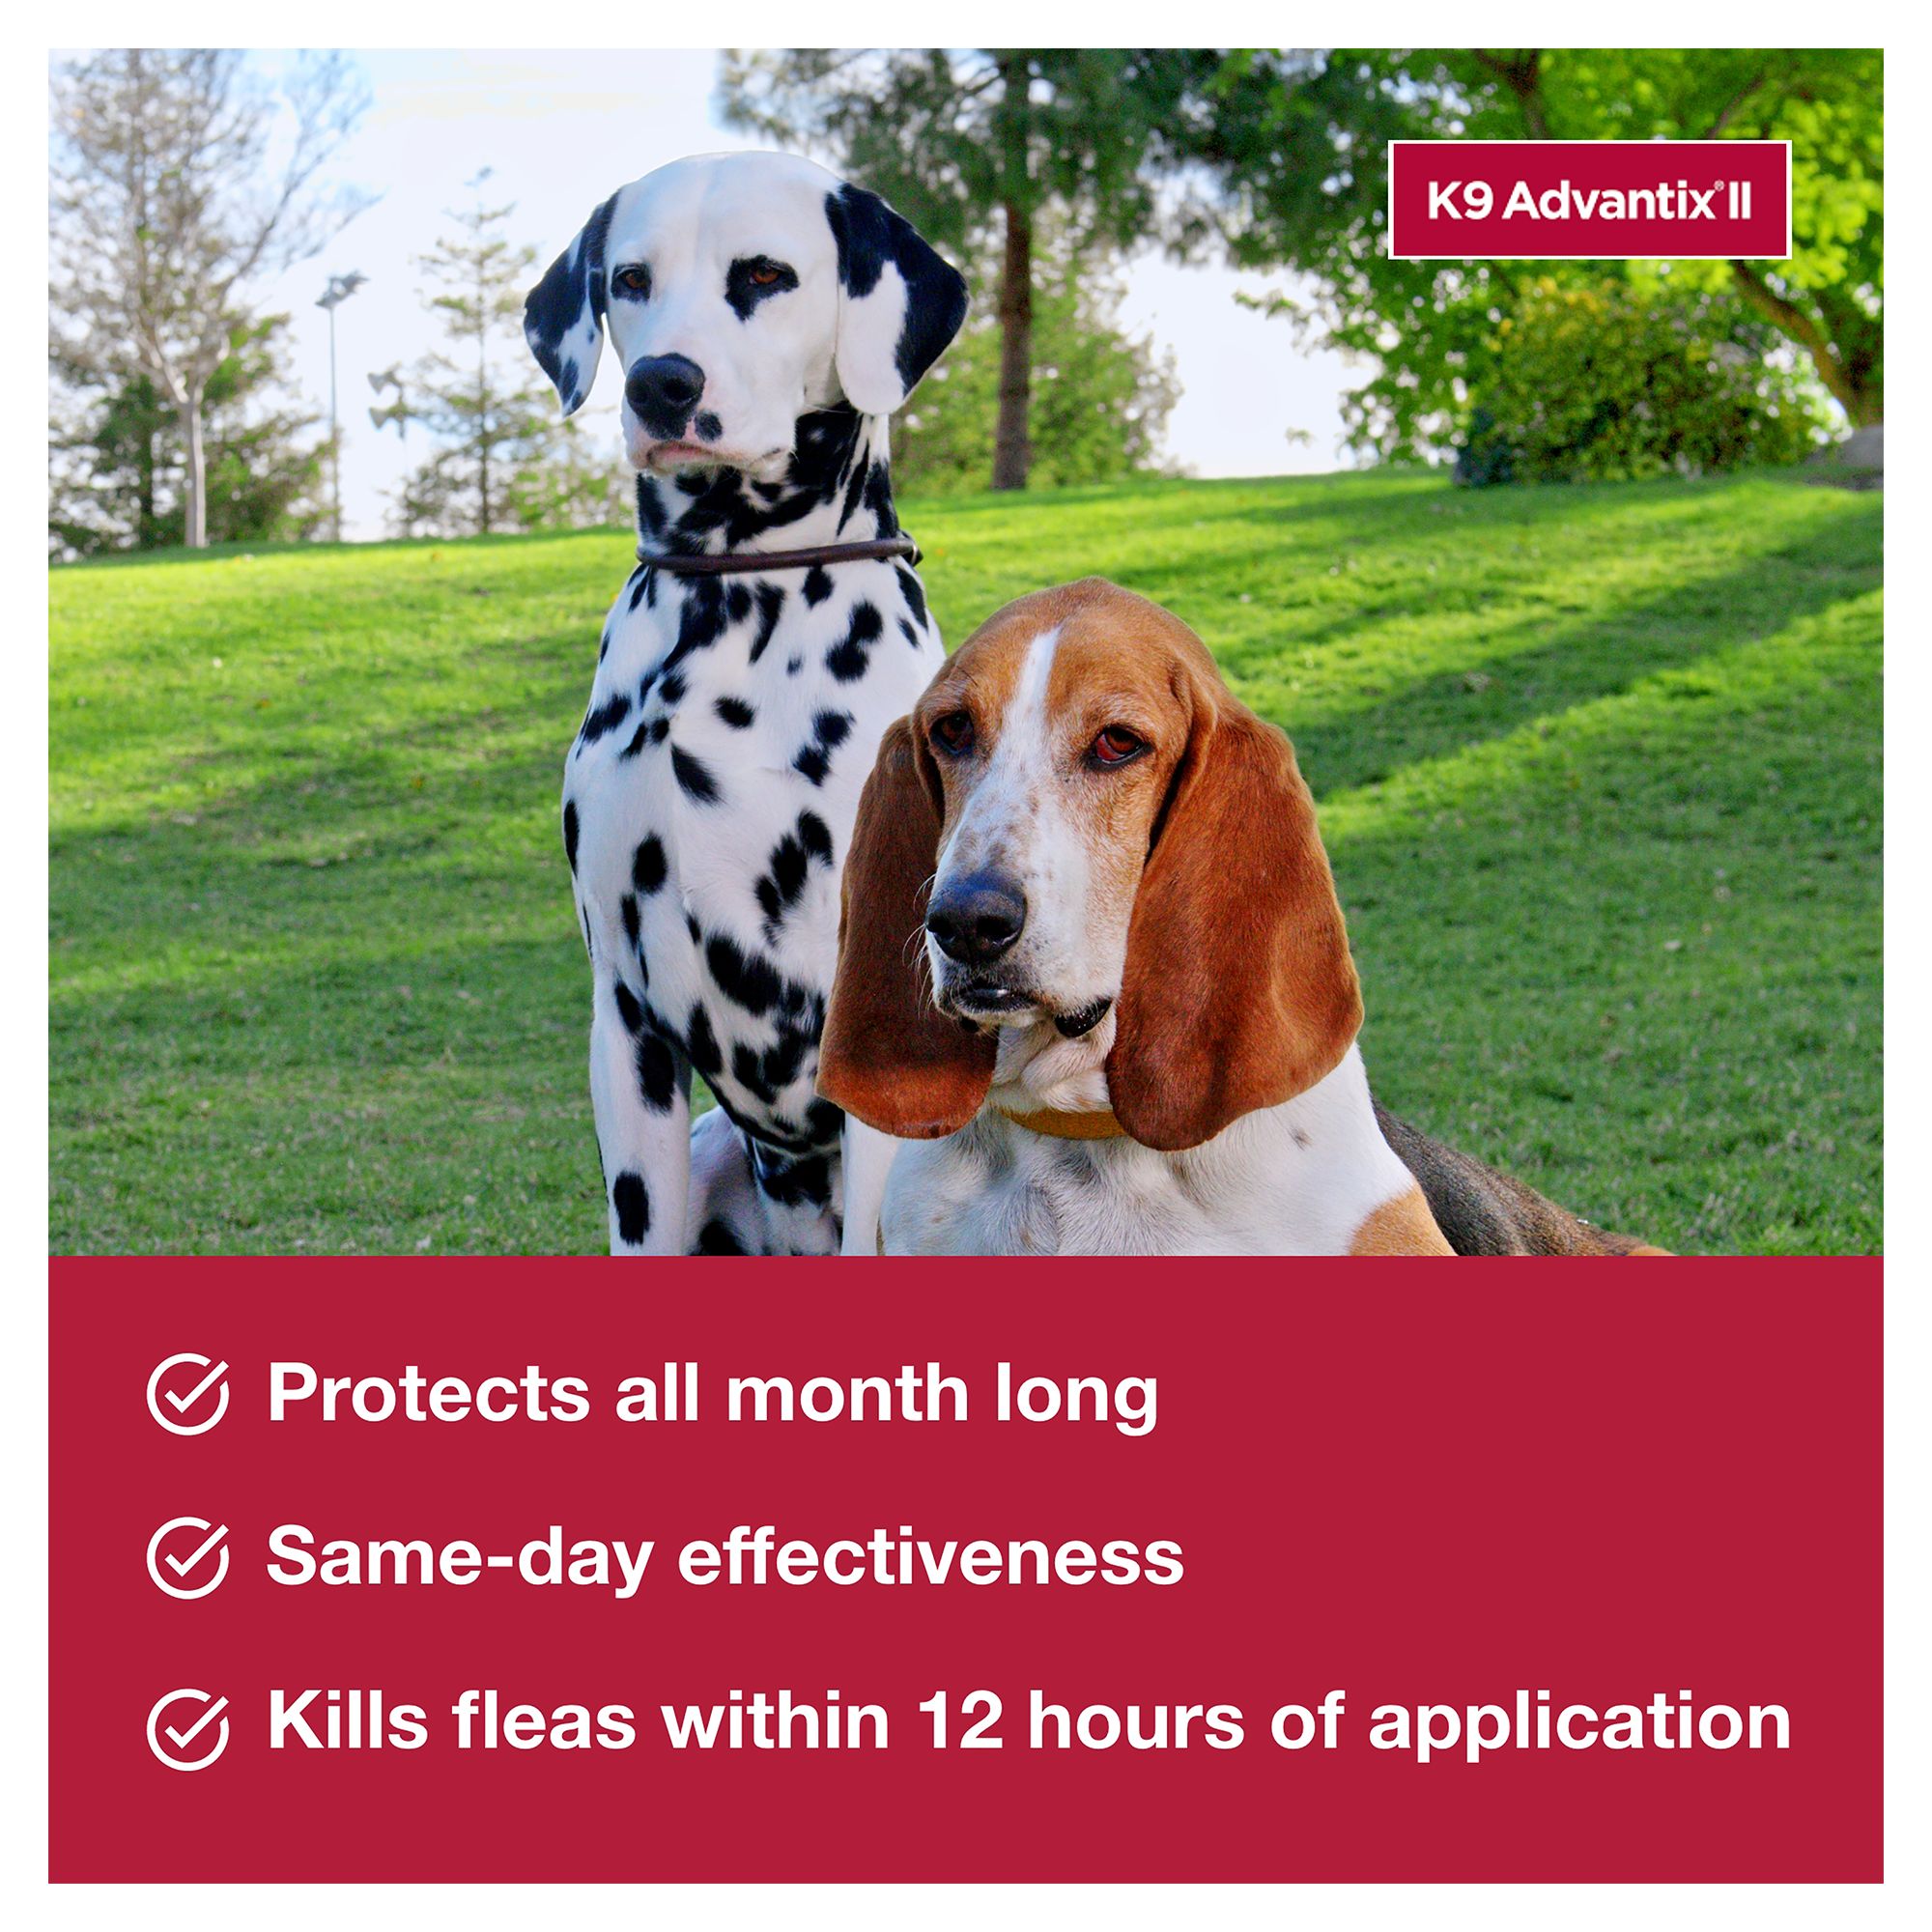 K9 Advantix® II 21-55 lbs Dog Flea 